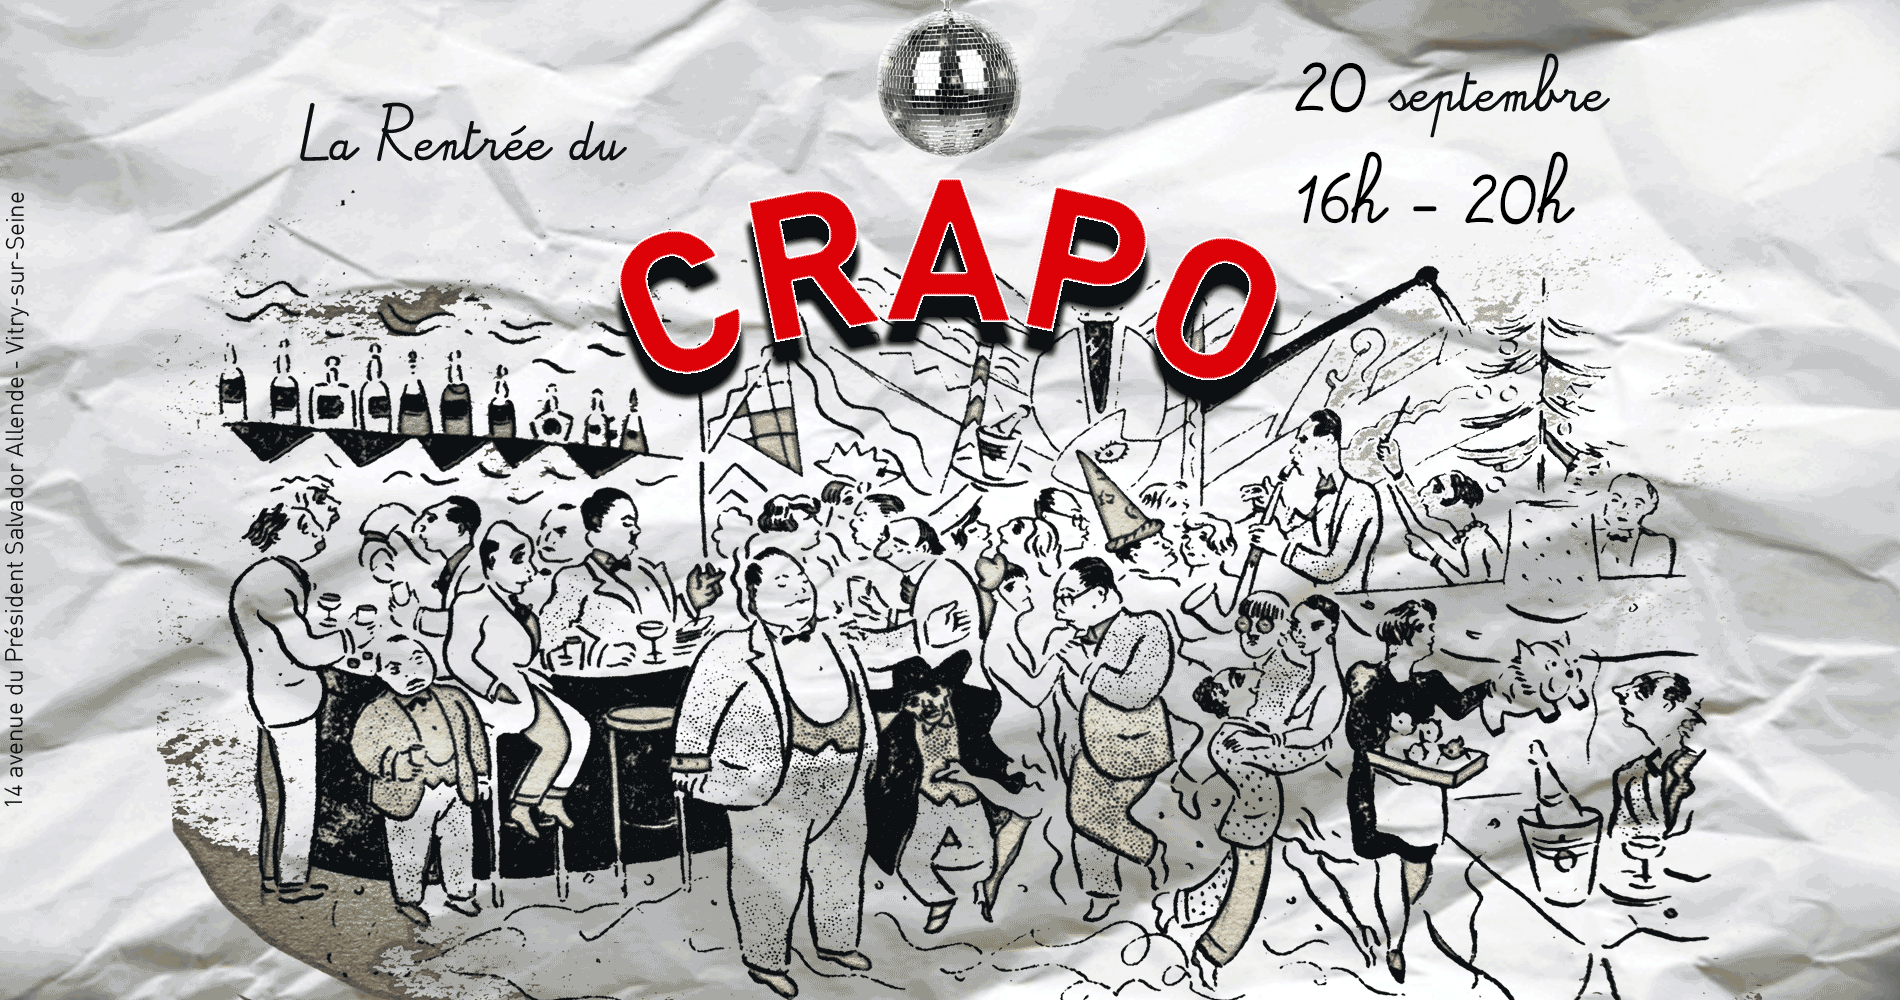 You are currently viewing La Rentrée du Crapo !